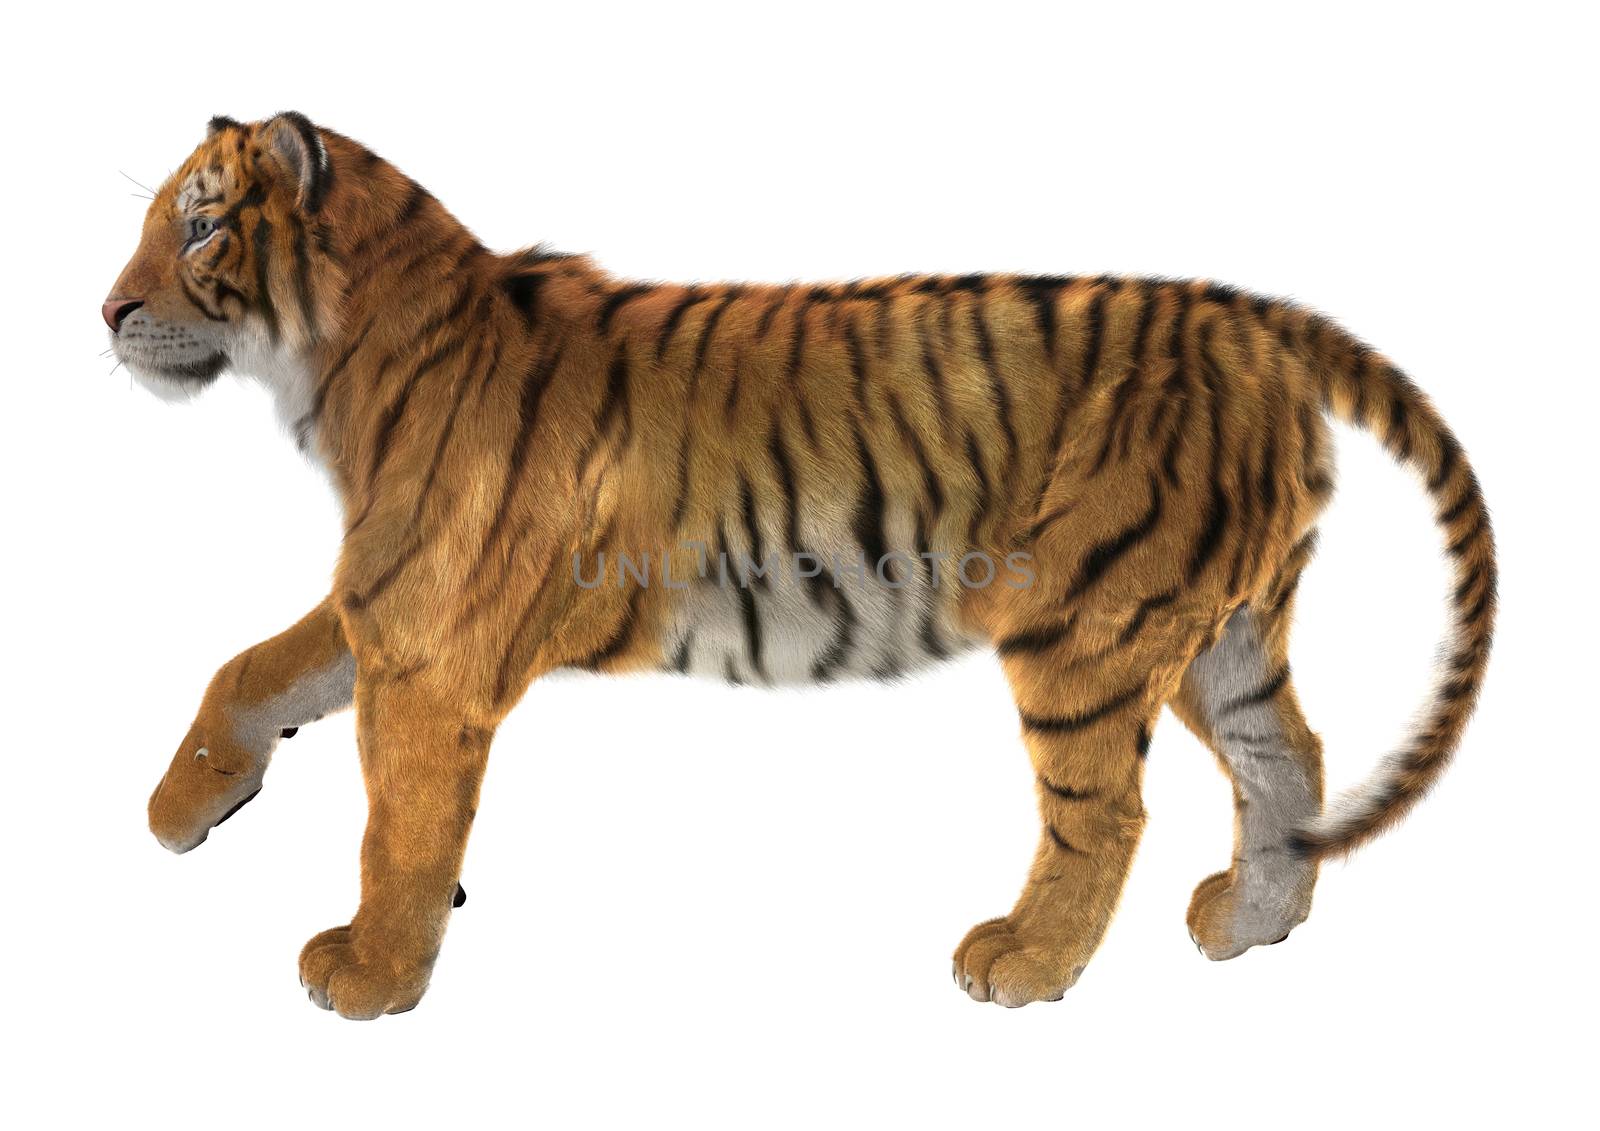 Tiger by Vac